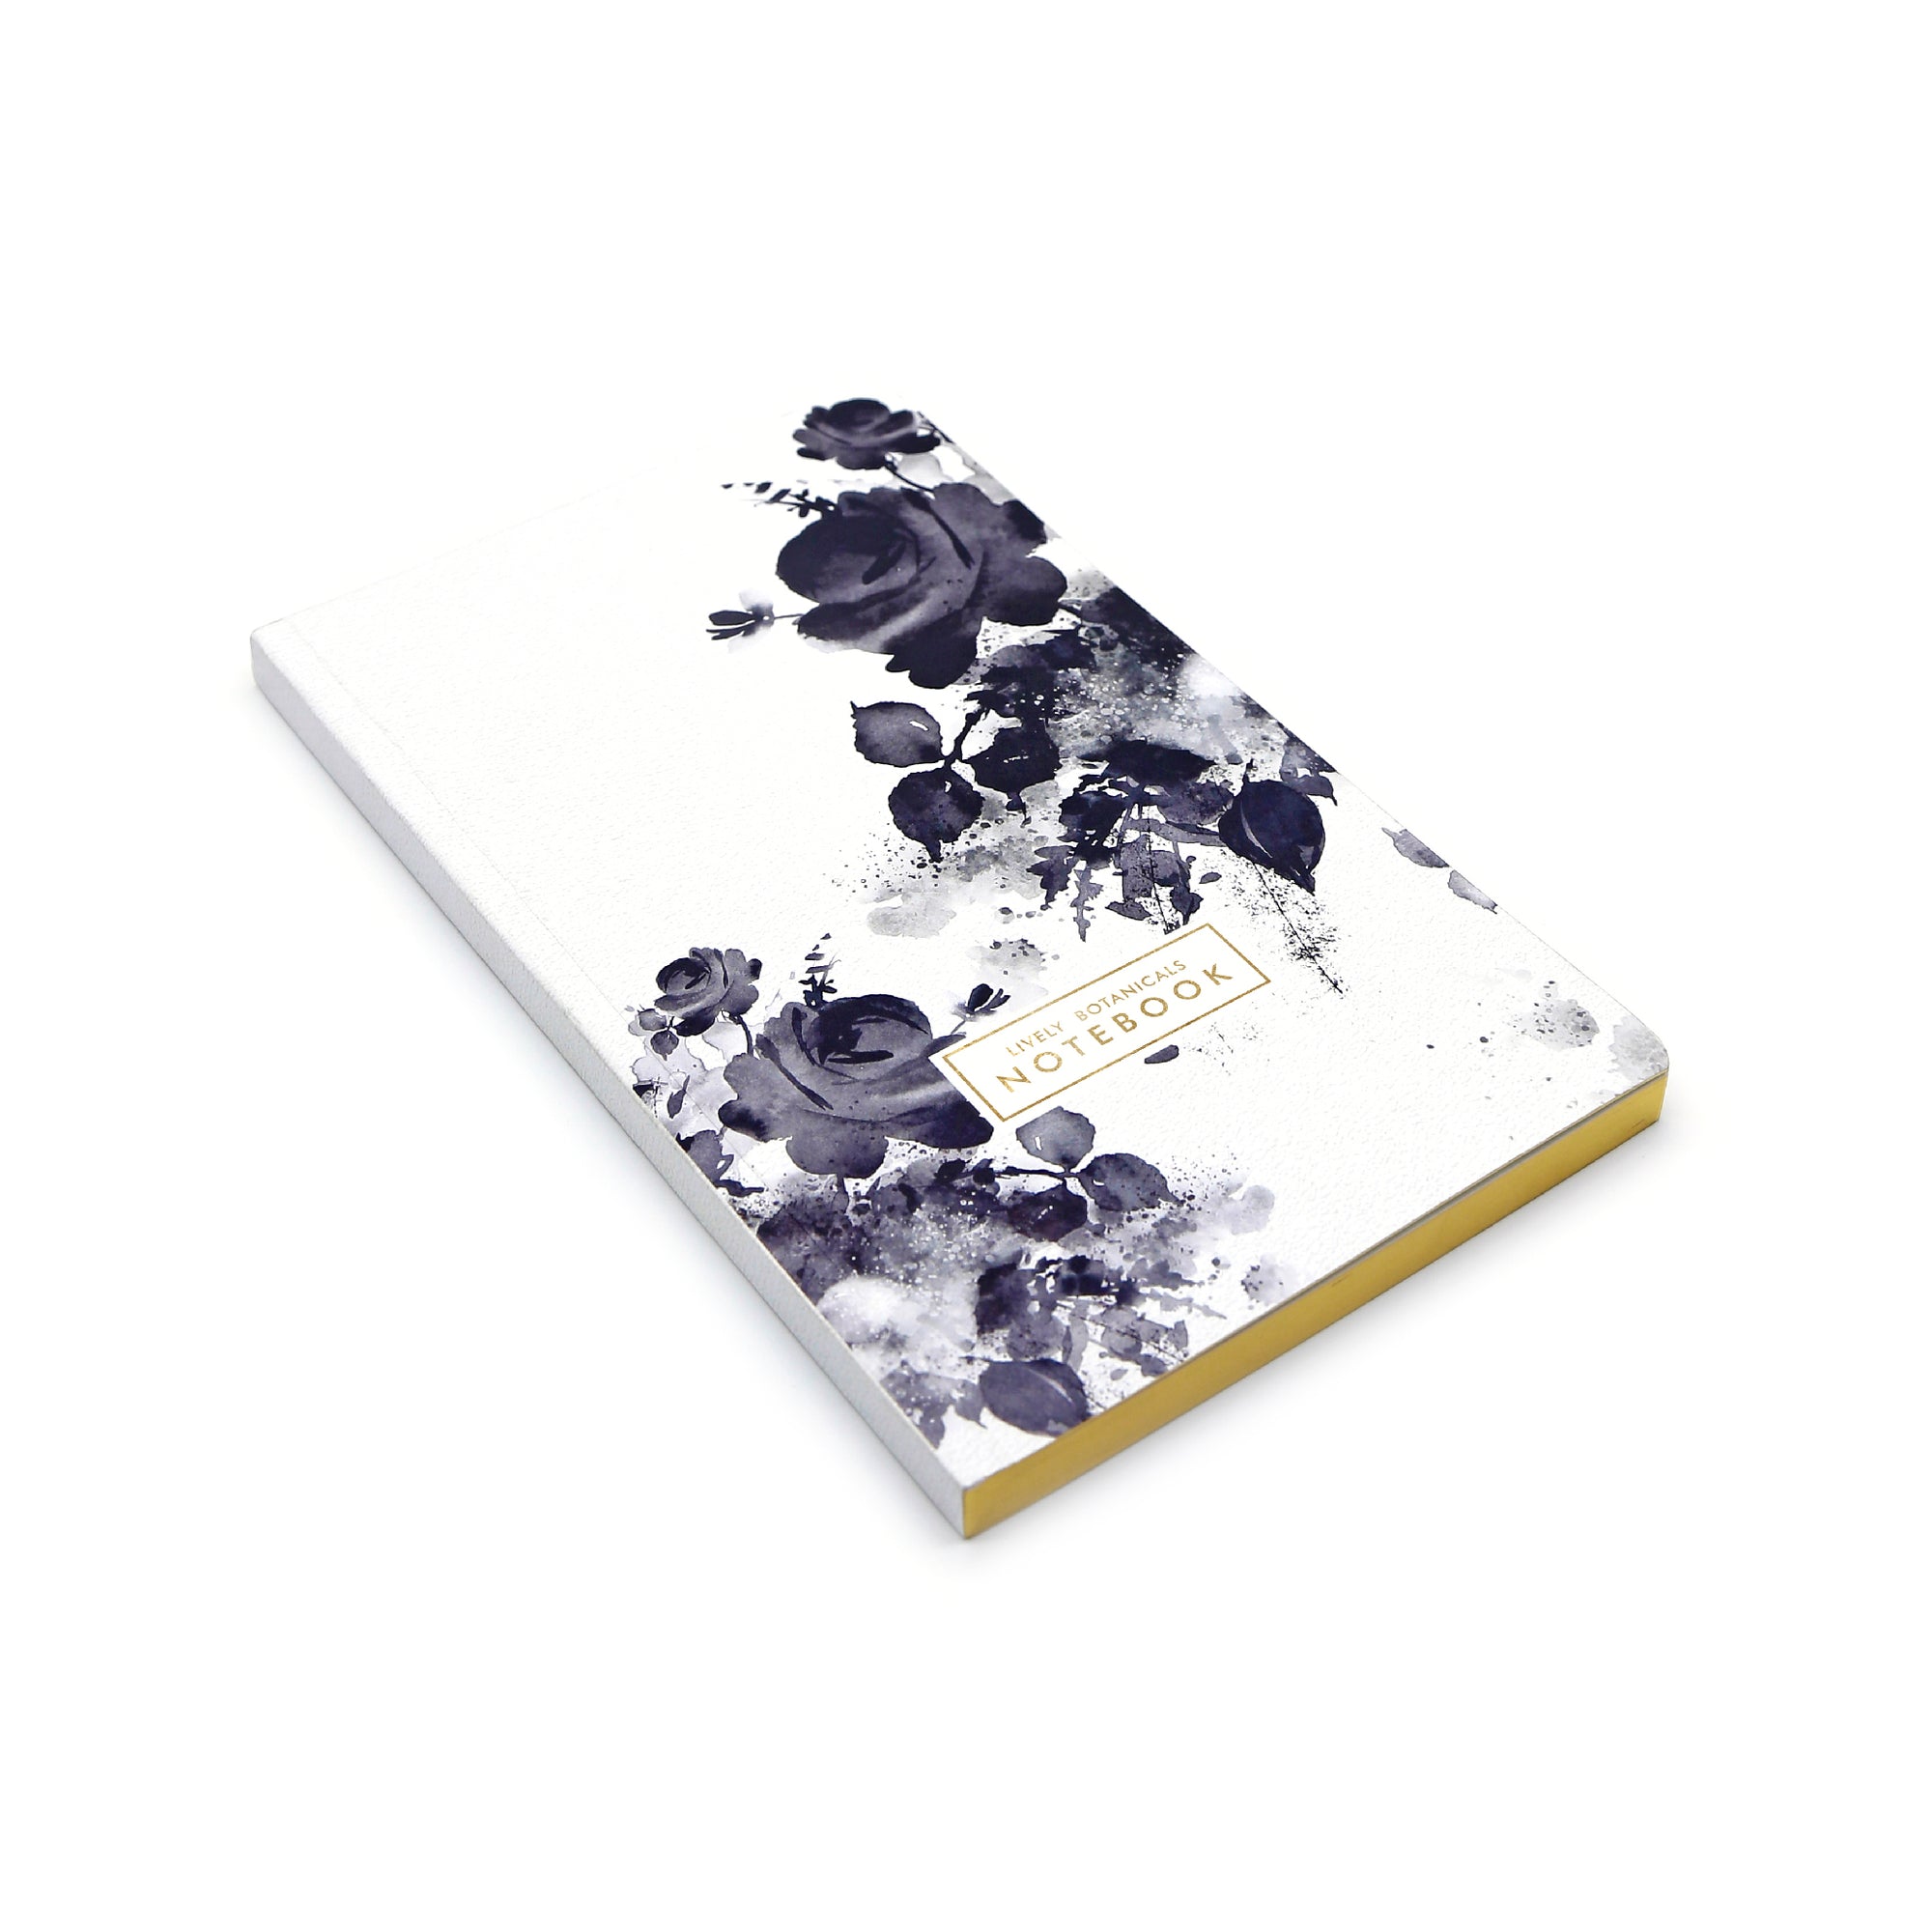 Lively Botanicals Notebook (Winter) - 7mm - Fine Paper Stationery